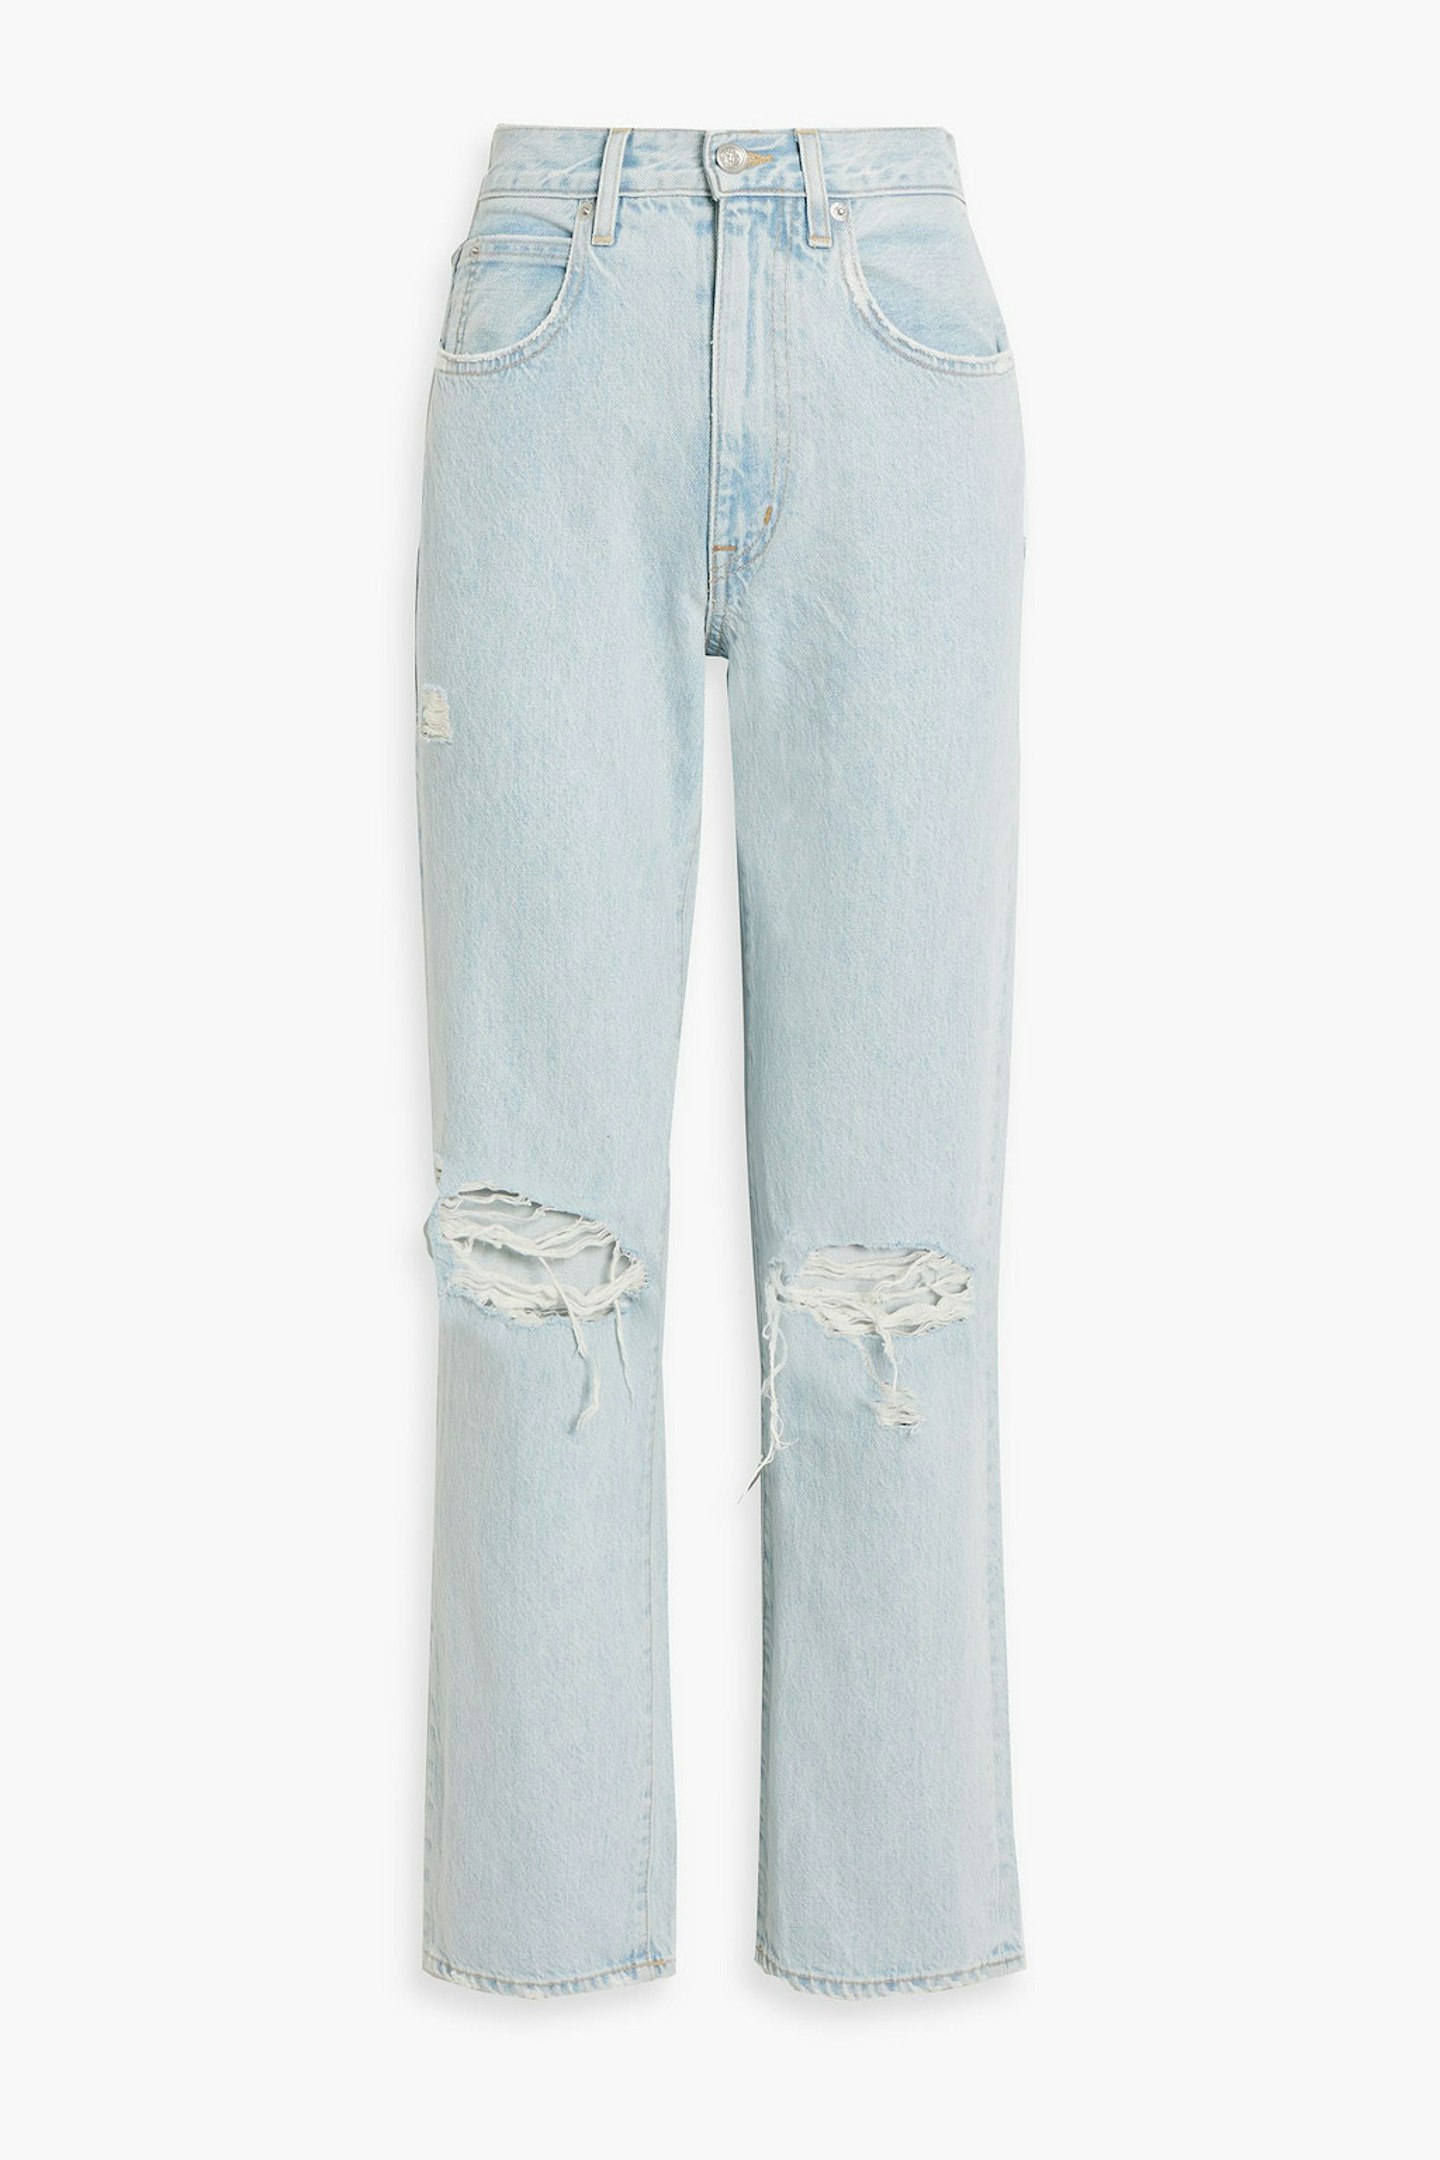 jeans outnet sale